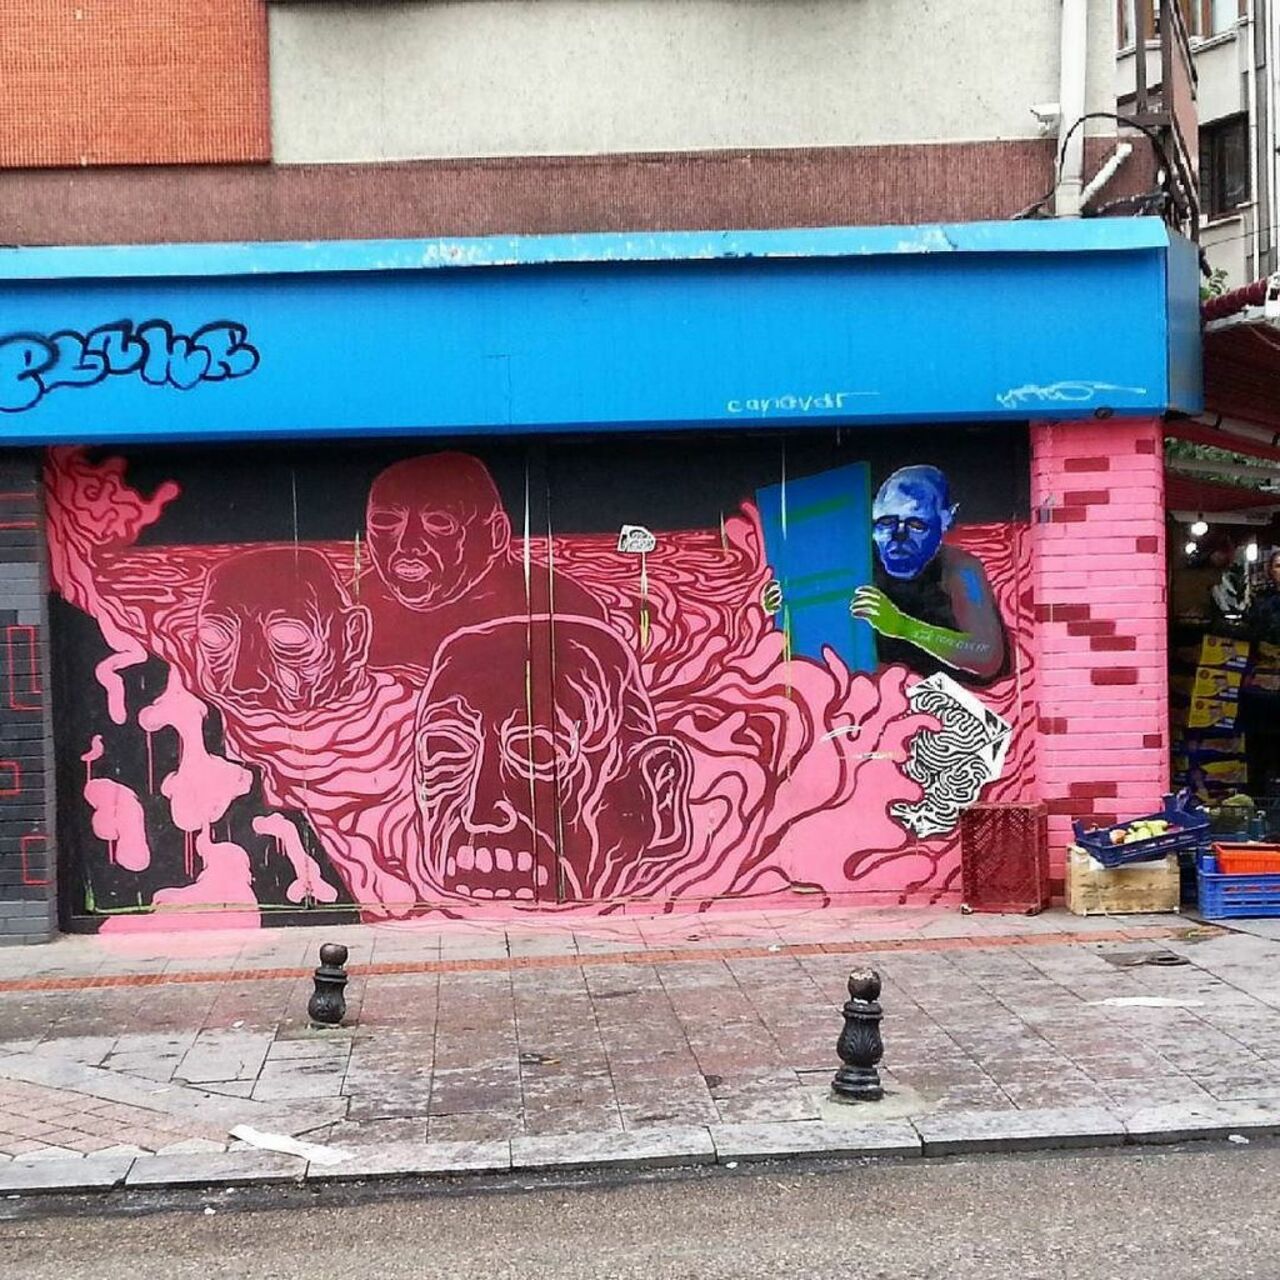 #streetartkadikoy #streetart #graffiti #publicart #urbanart #sokaksanatı #streetartistanbul #istanbulstreetart #gra… https://t.co/OJRkjYKDB6